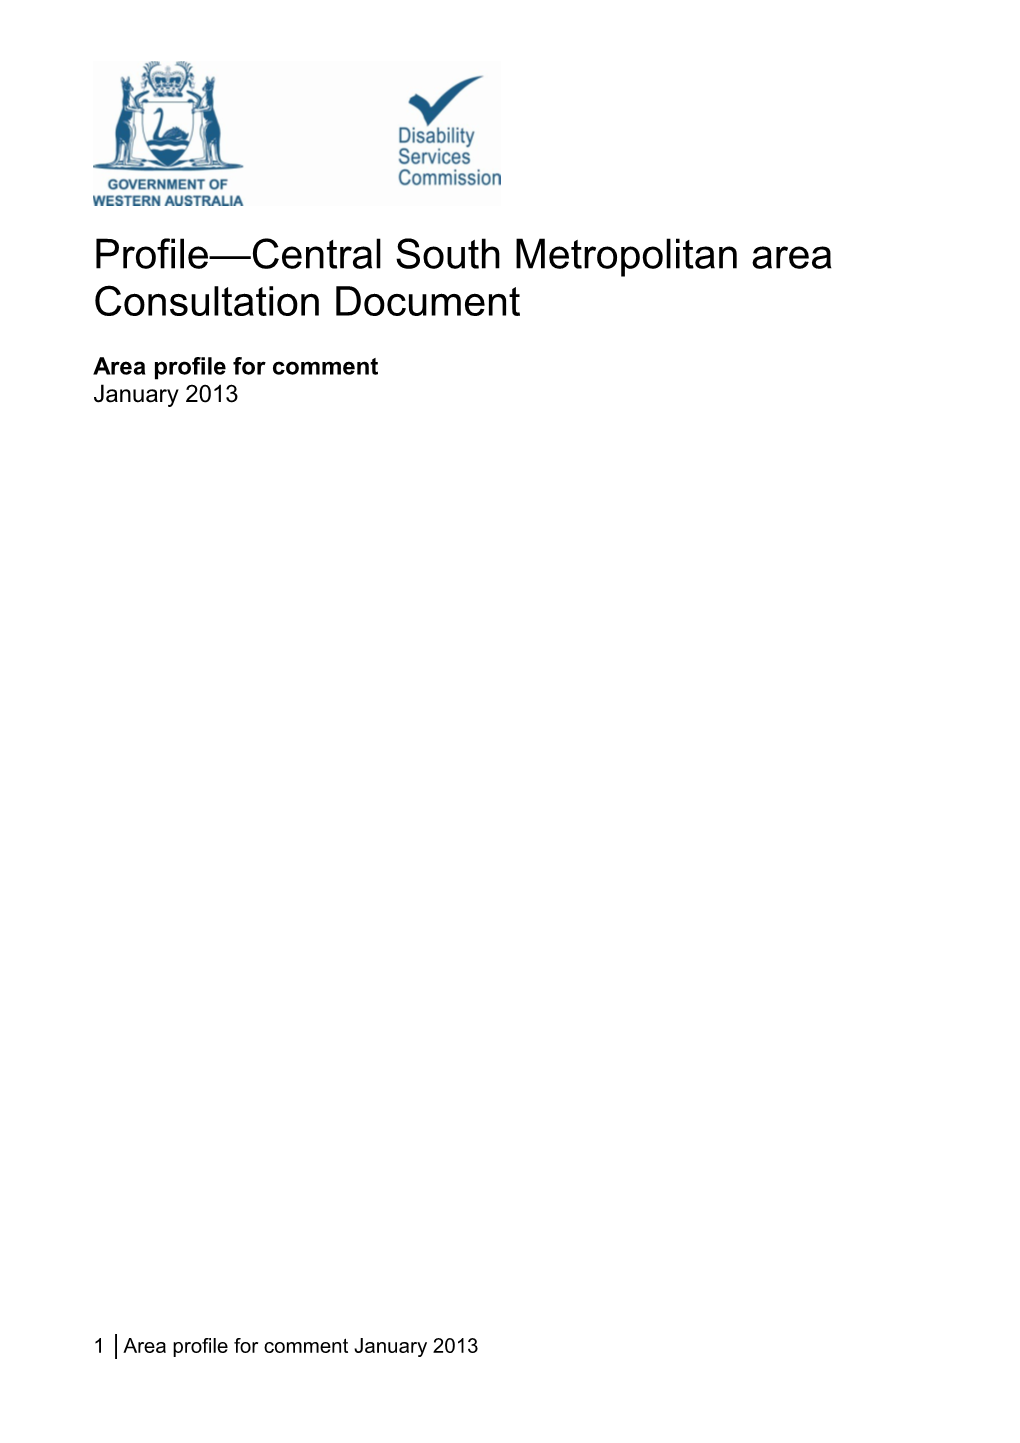 Central South Metropolitan Area Profile Consultation Document - Accessible